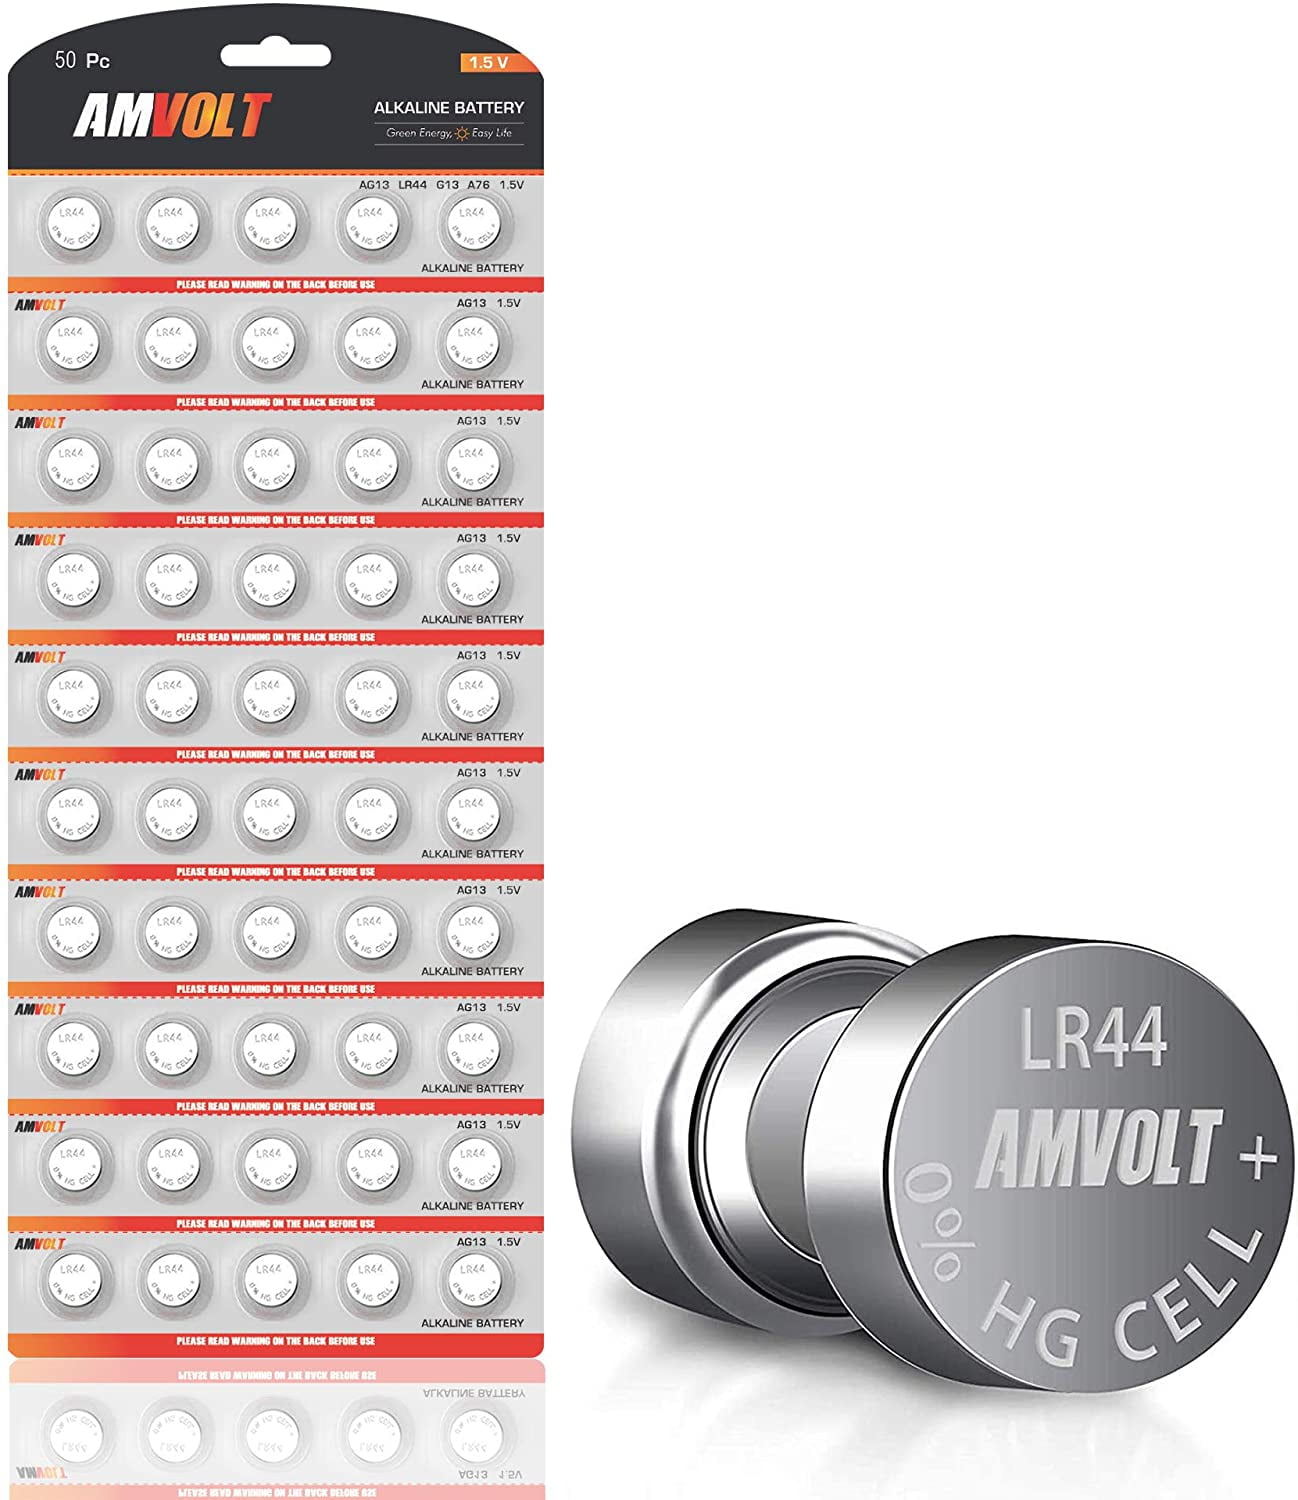 LR44 Batteries 10 Pack replaces maxell (Replaces: LR44, CR44, SR44, 357,  SR44W, AG13, G13, A76, A-76, PX76, 675, 1166a, LR44H, V13GA, GP76A, L1154,  RW82B, EPX76, SR44SW, 303, SR44, S303, S357, SP303, 